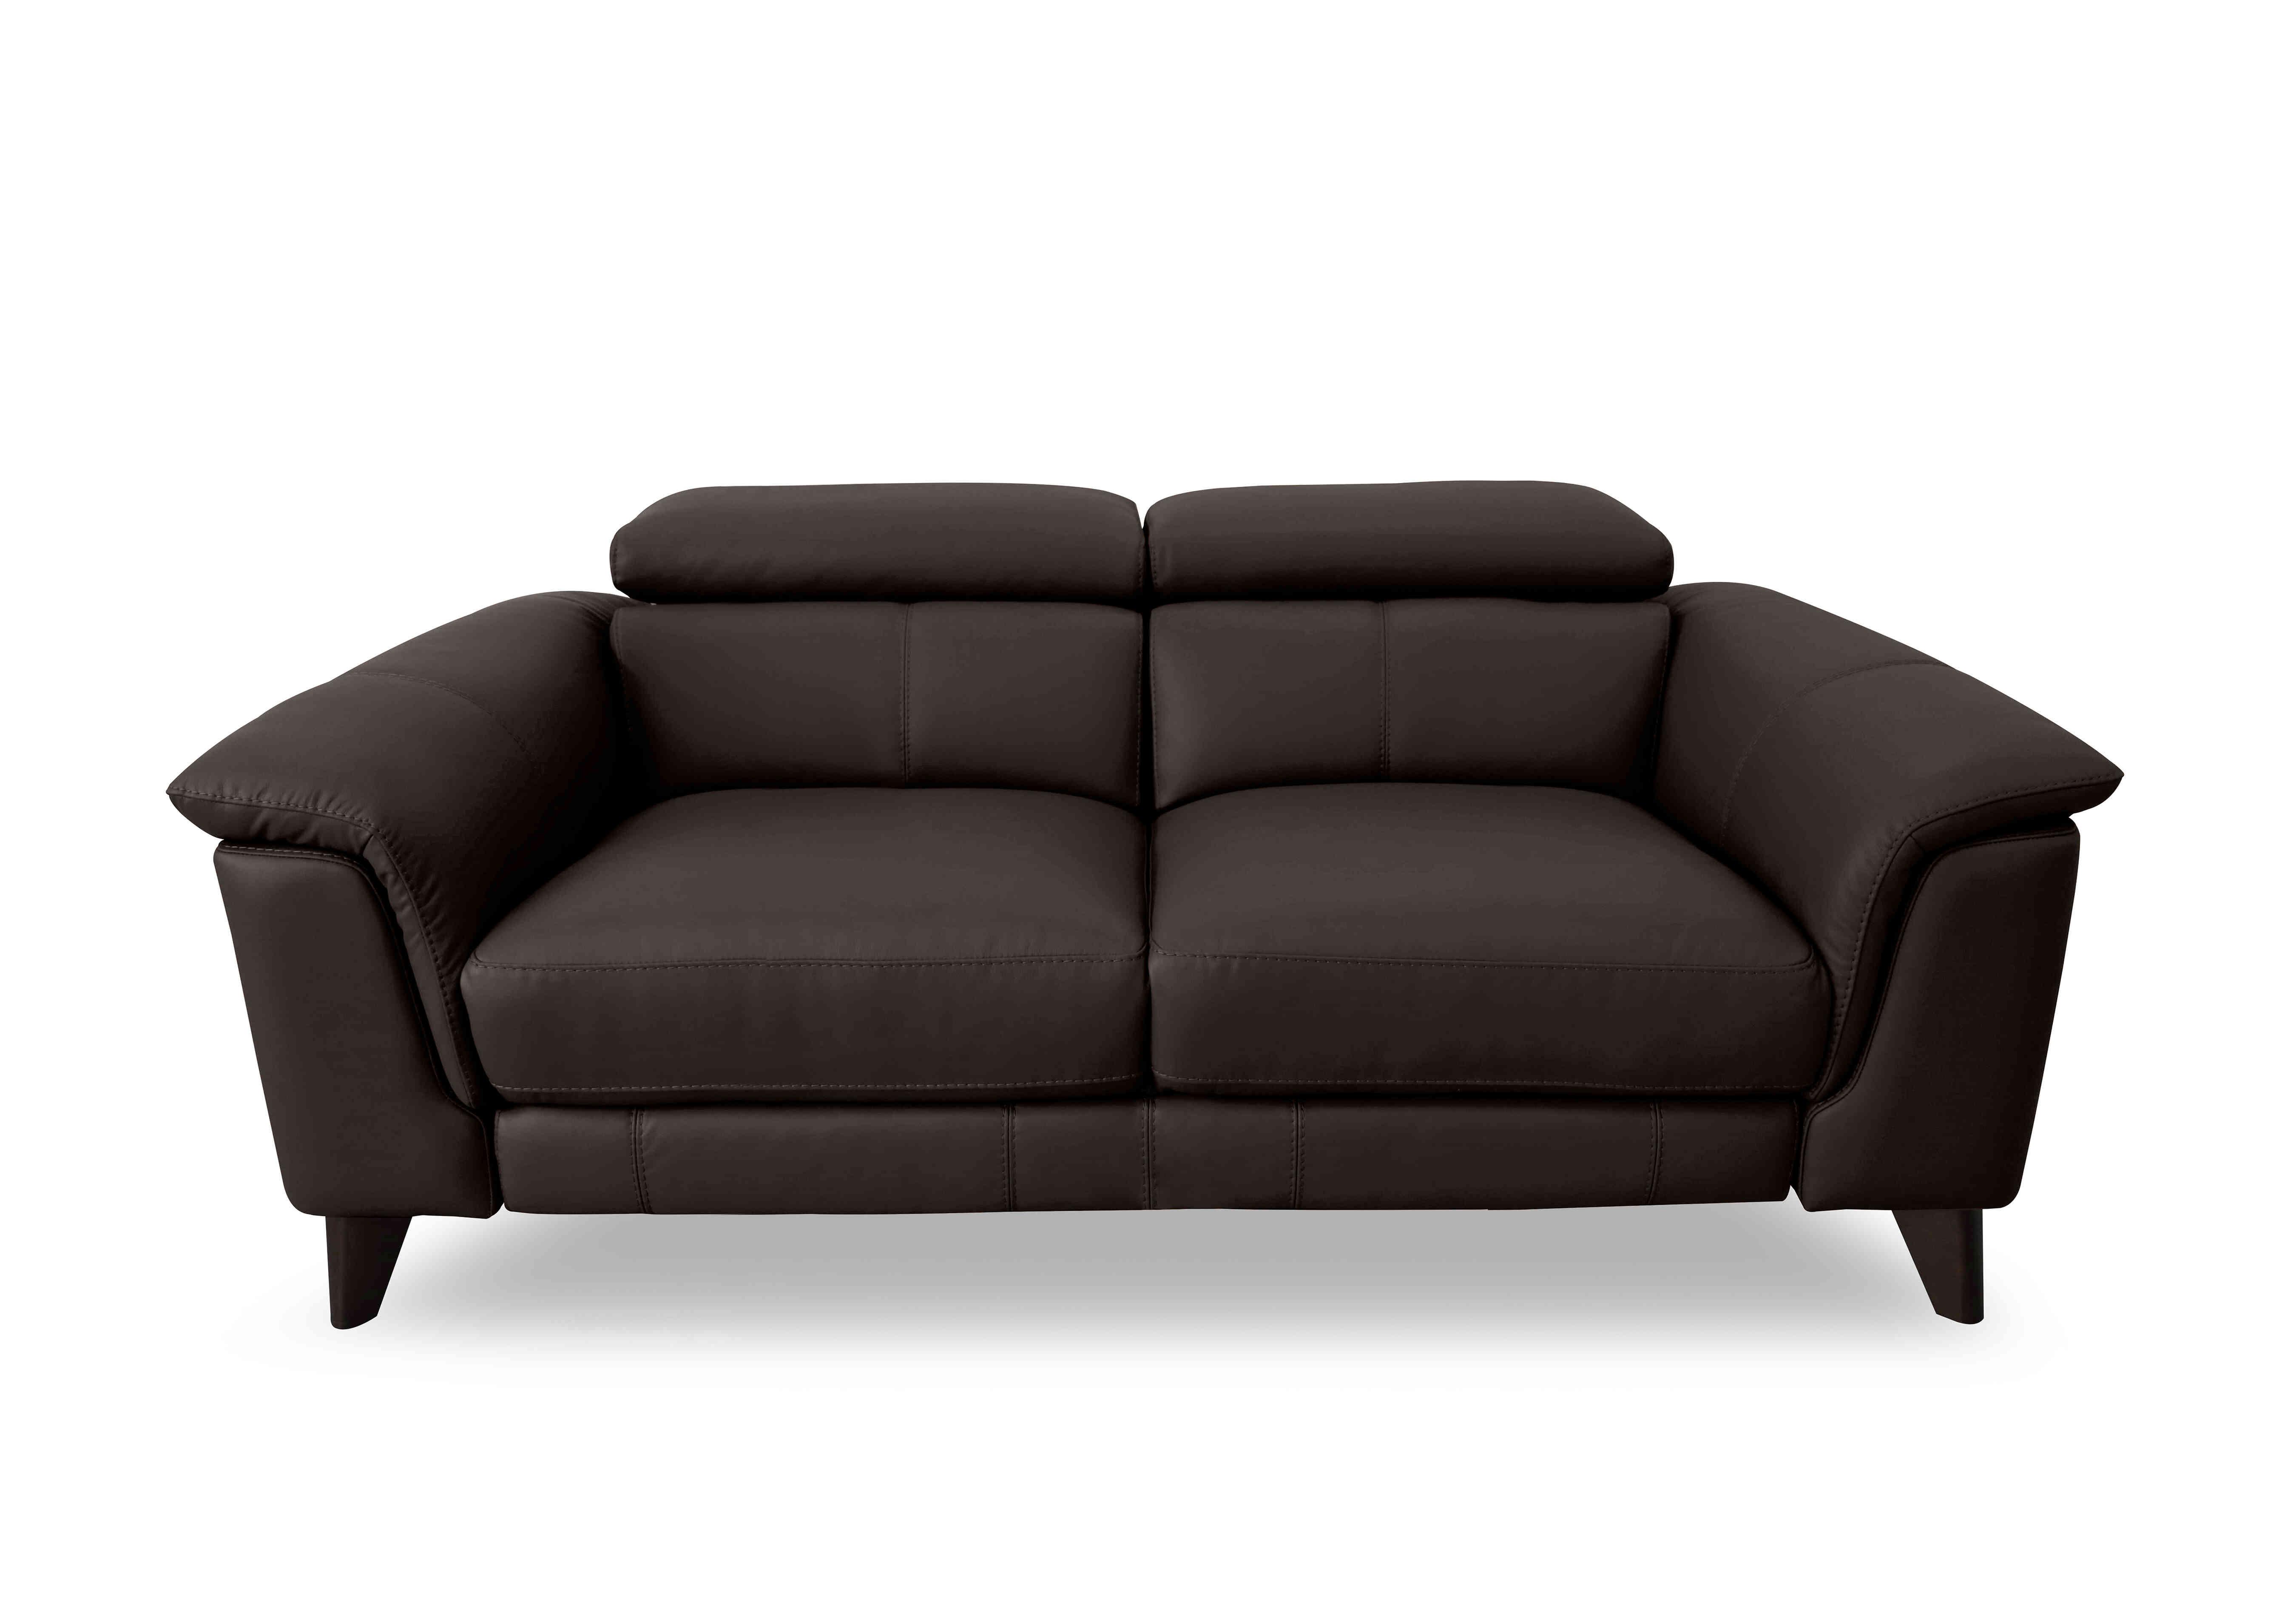 Wade 3 Seater Leather Sofa in Bv-1748 Dark Chocolate on Furniture Village